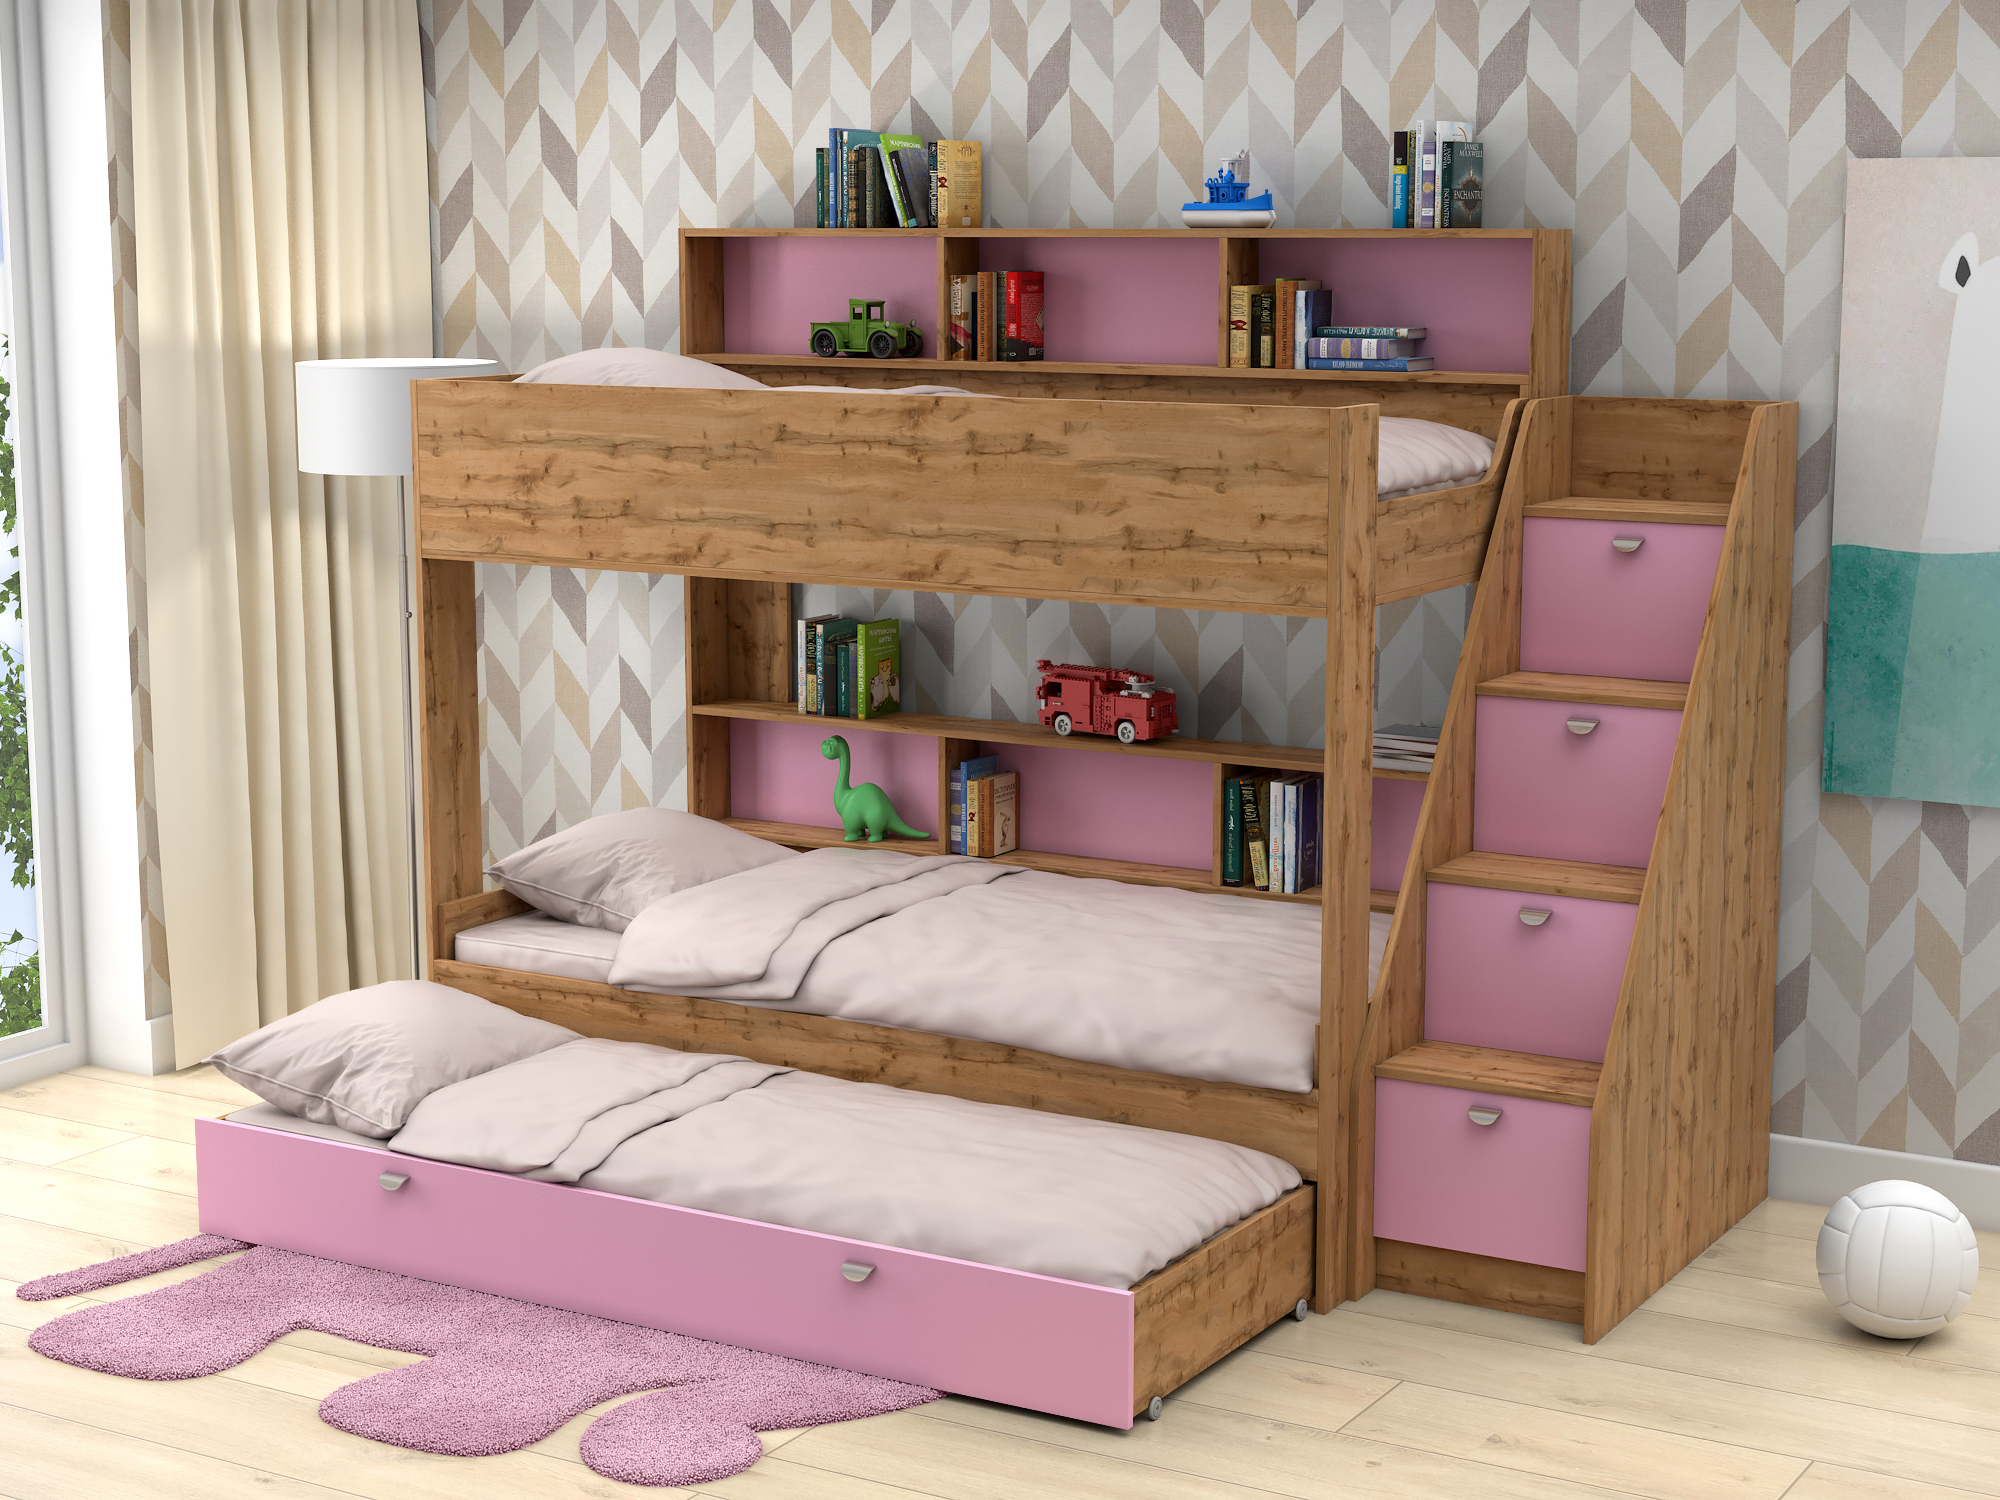 Трехъярусная кровать Golden Kids 10.1 (90х190/85х185) Розовый, Бежевый, ЛДСП трехъярусная кровать golden kids 10 1 90х190 85х185 розовый бежевый лдсп